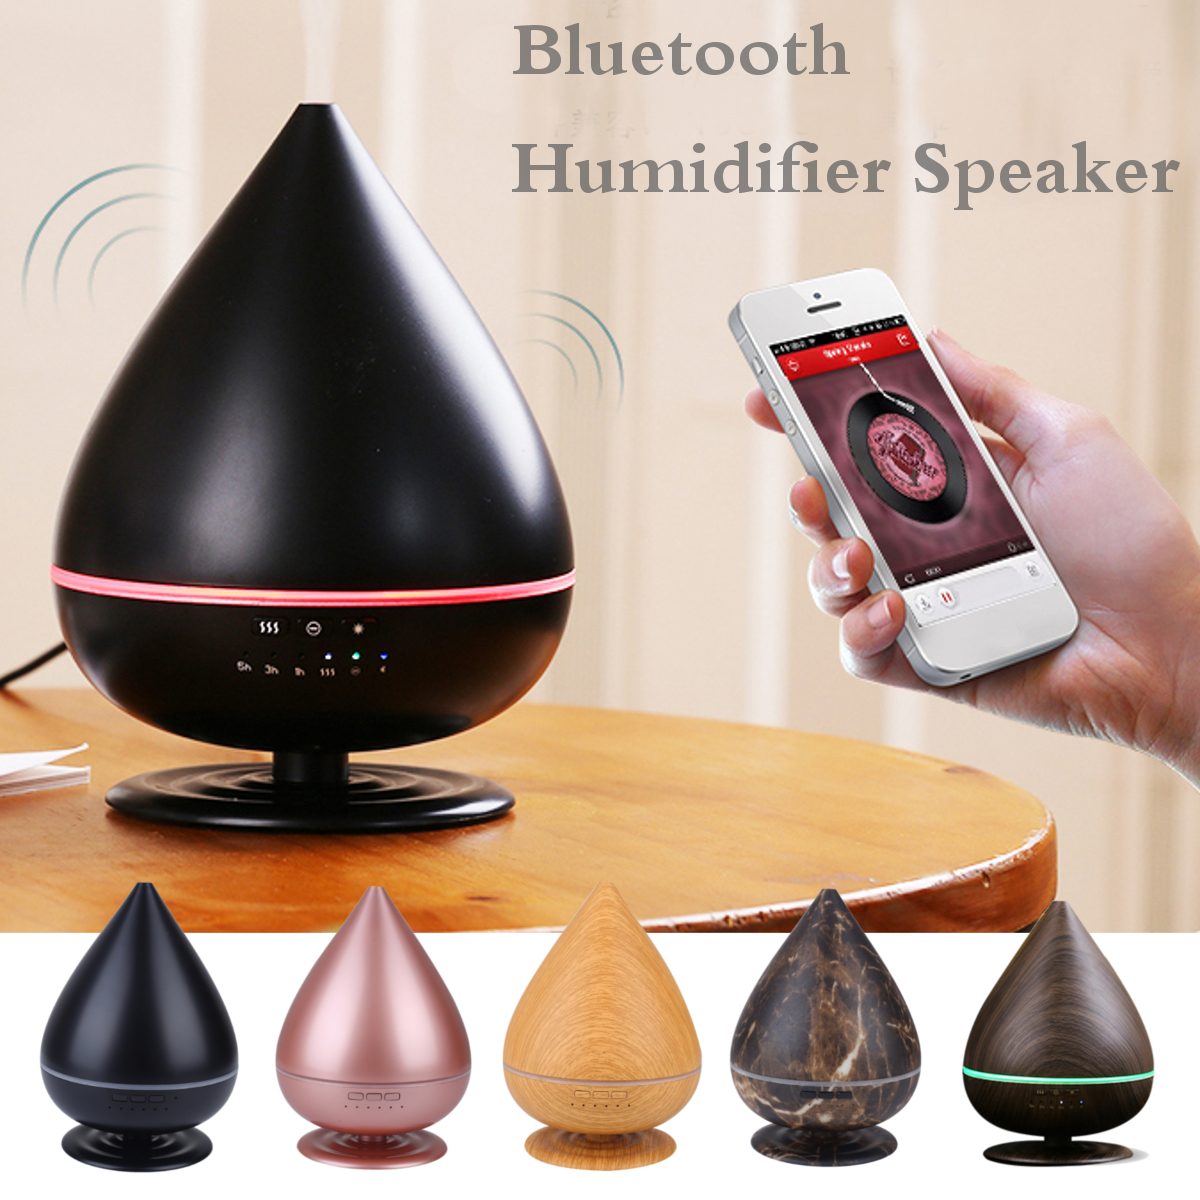 Wireless-bluetooth-Speaker-Ultrasonic-Aroma-Humidfier-Air-Cleaner-LED-bluetooth-Humidfier-Speaker-1350924-5